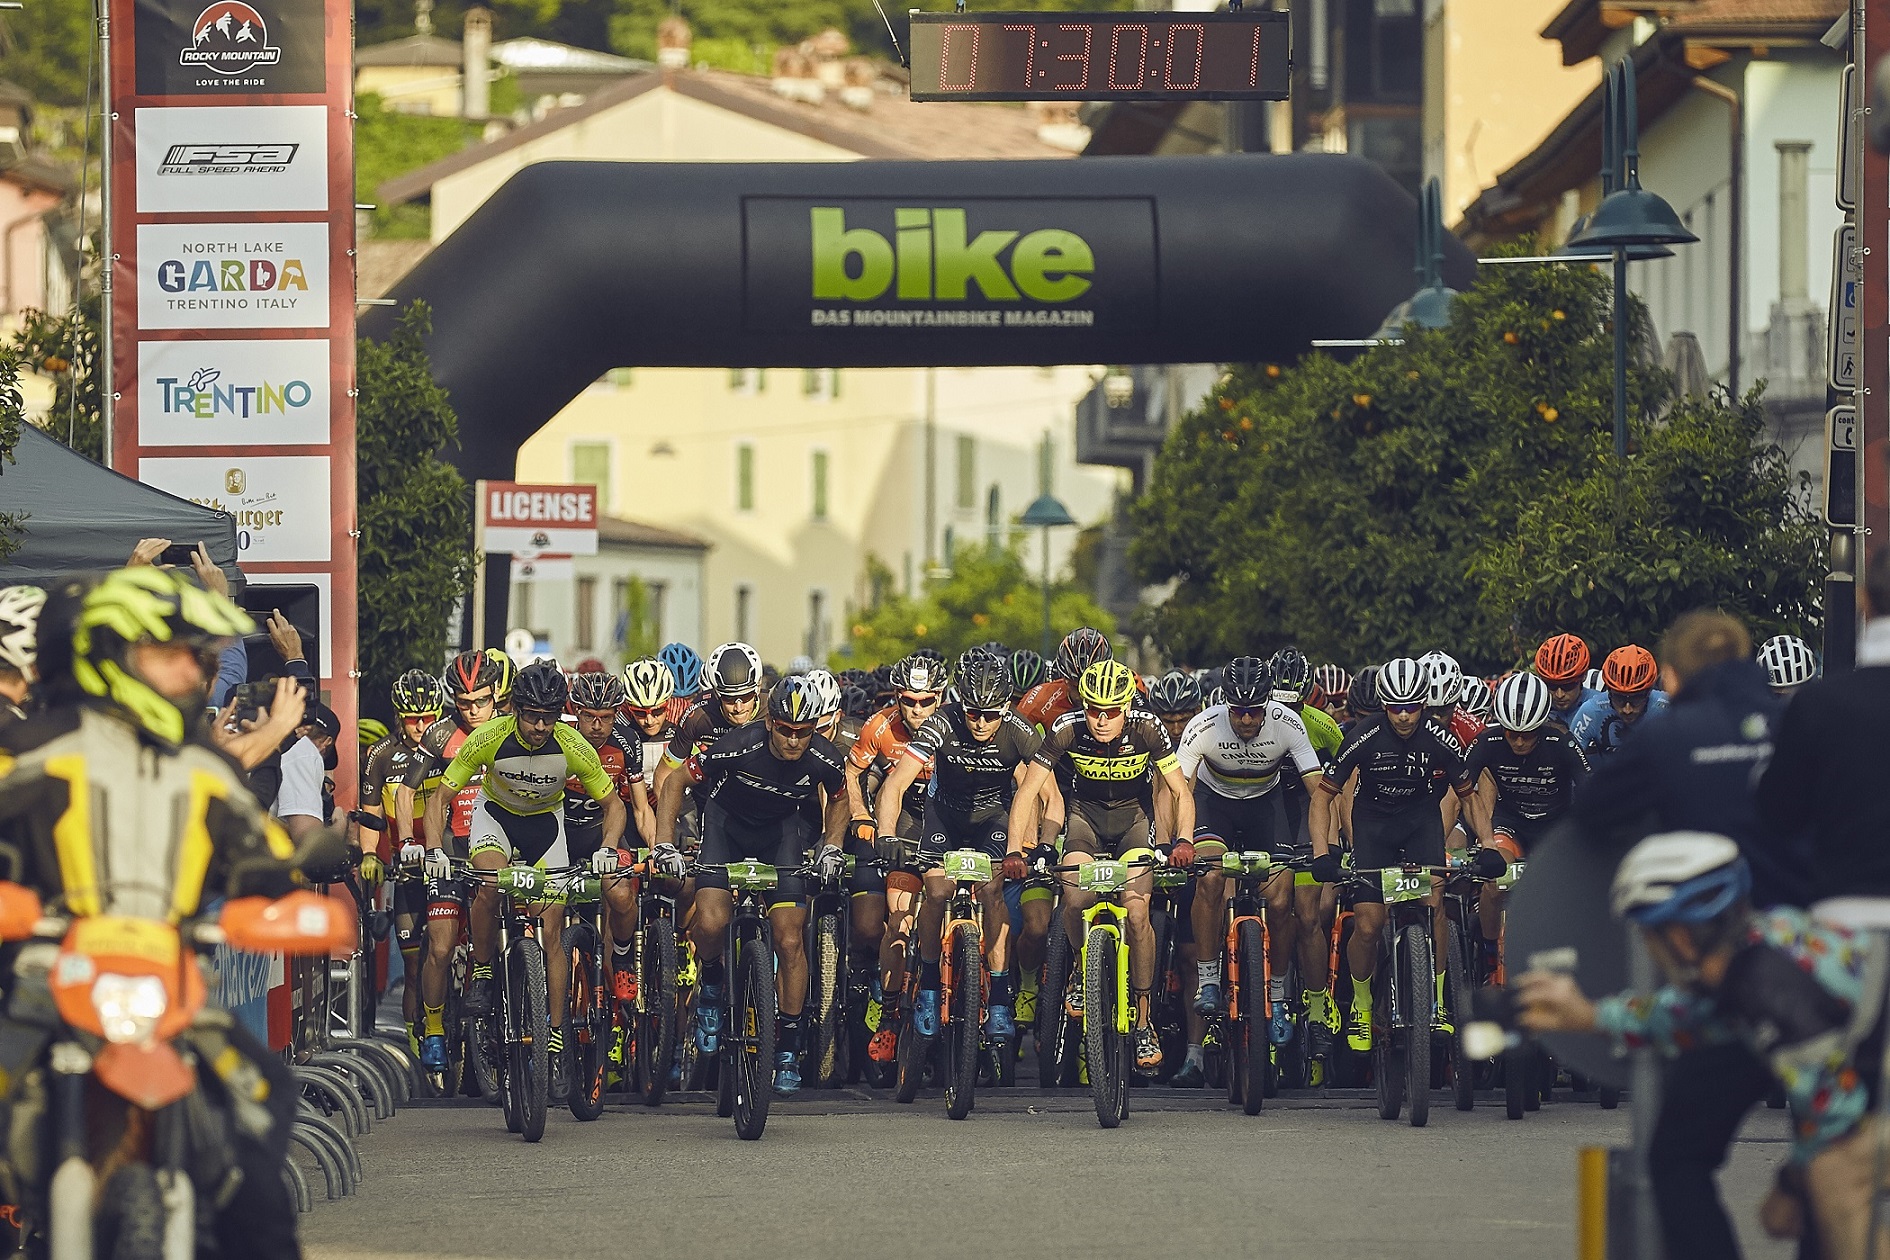 27. Bike Festival Garda Trentino